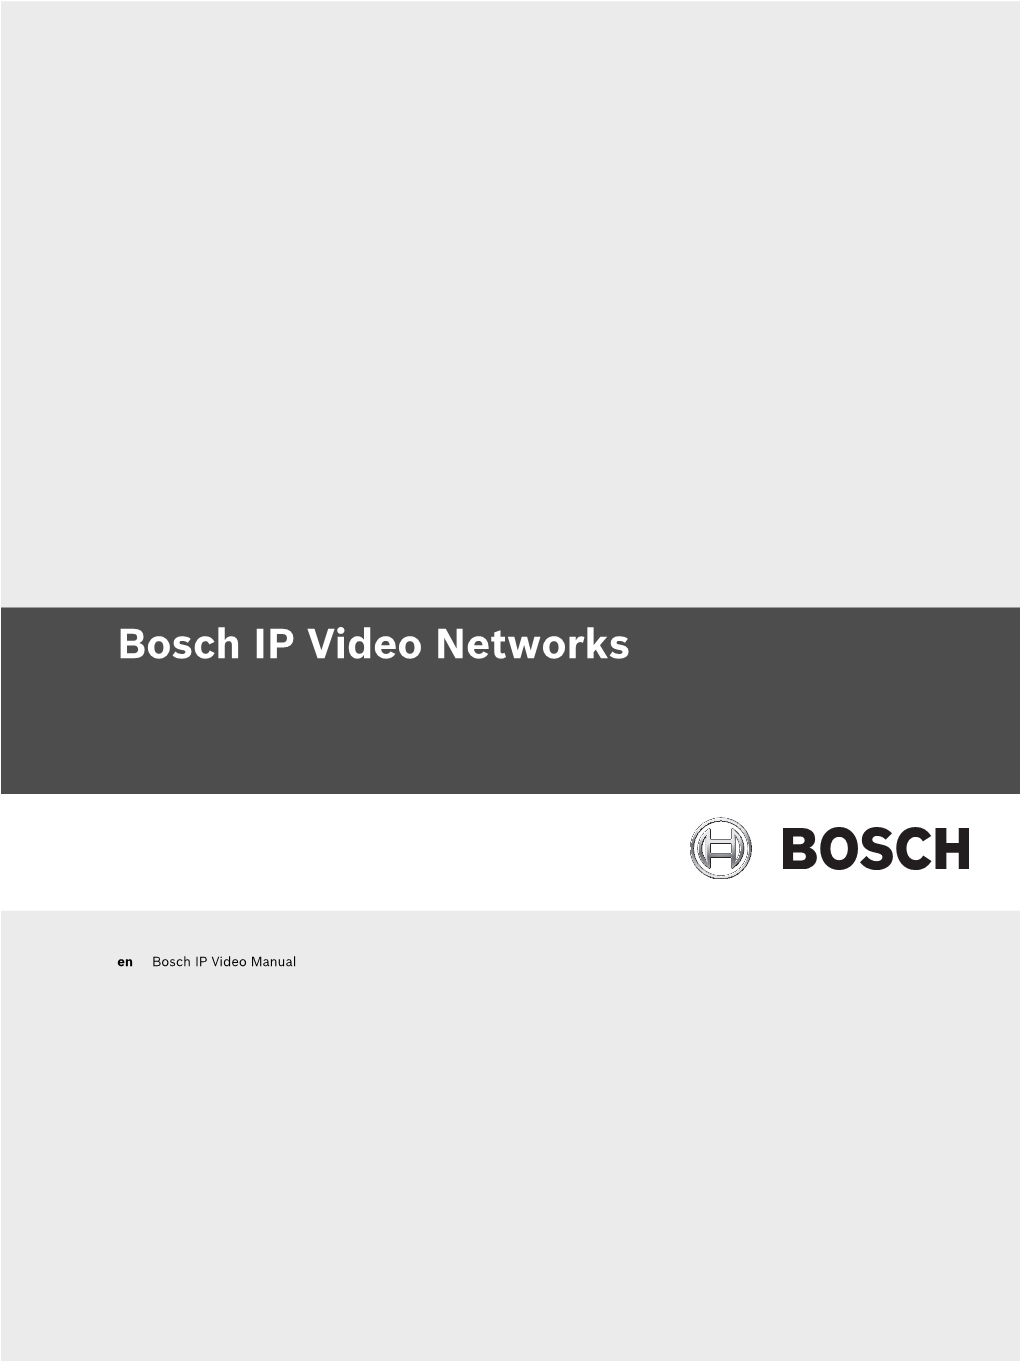 Bosch IP Video Networks